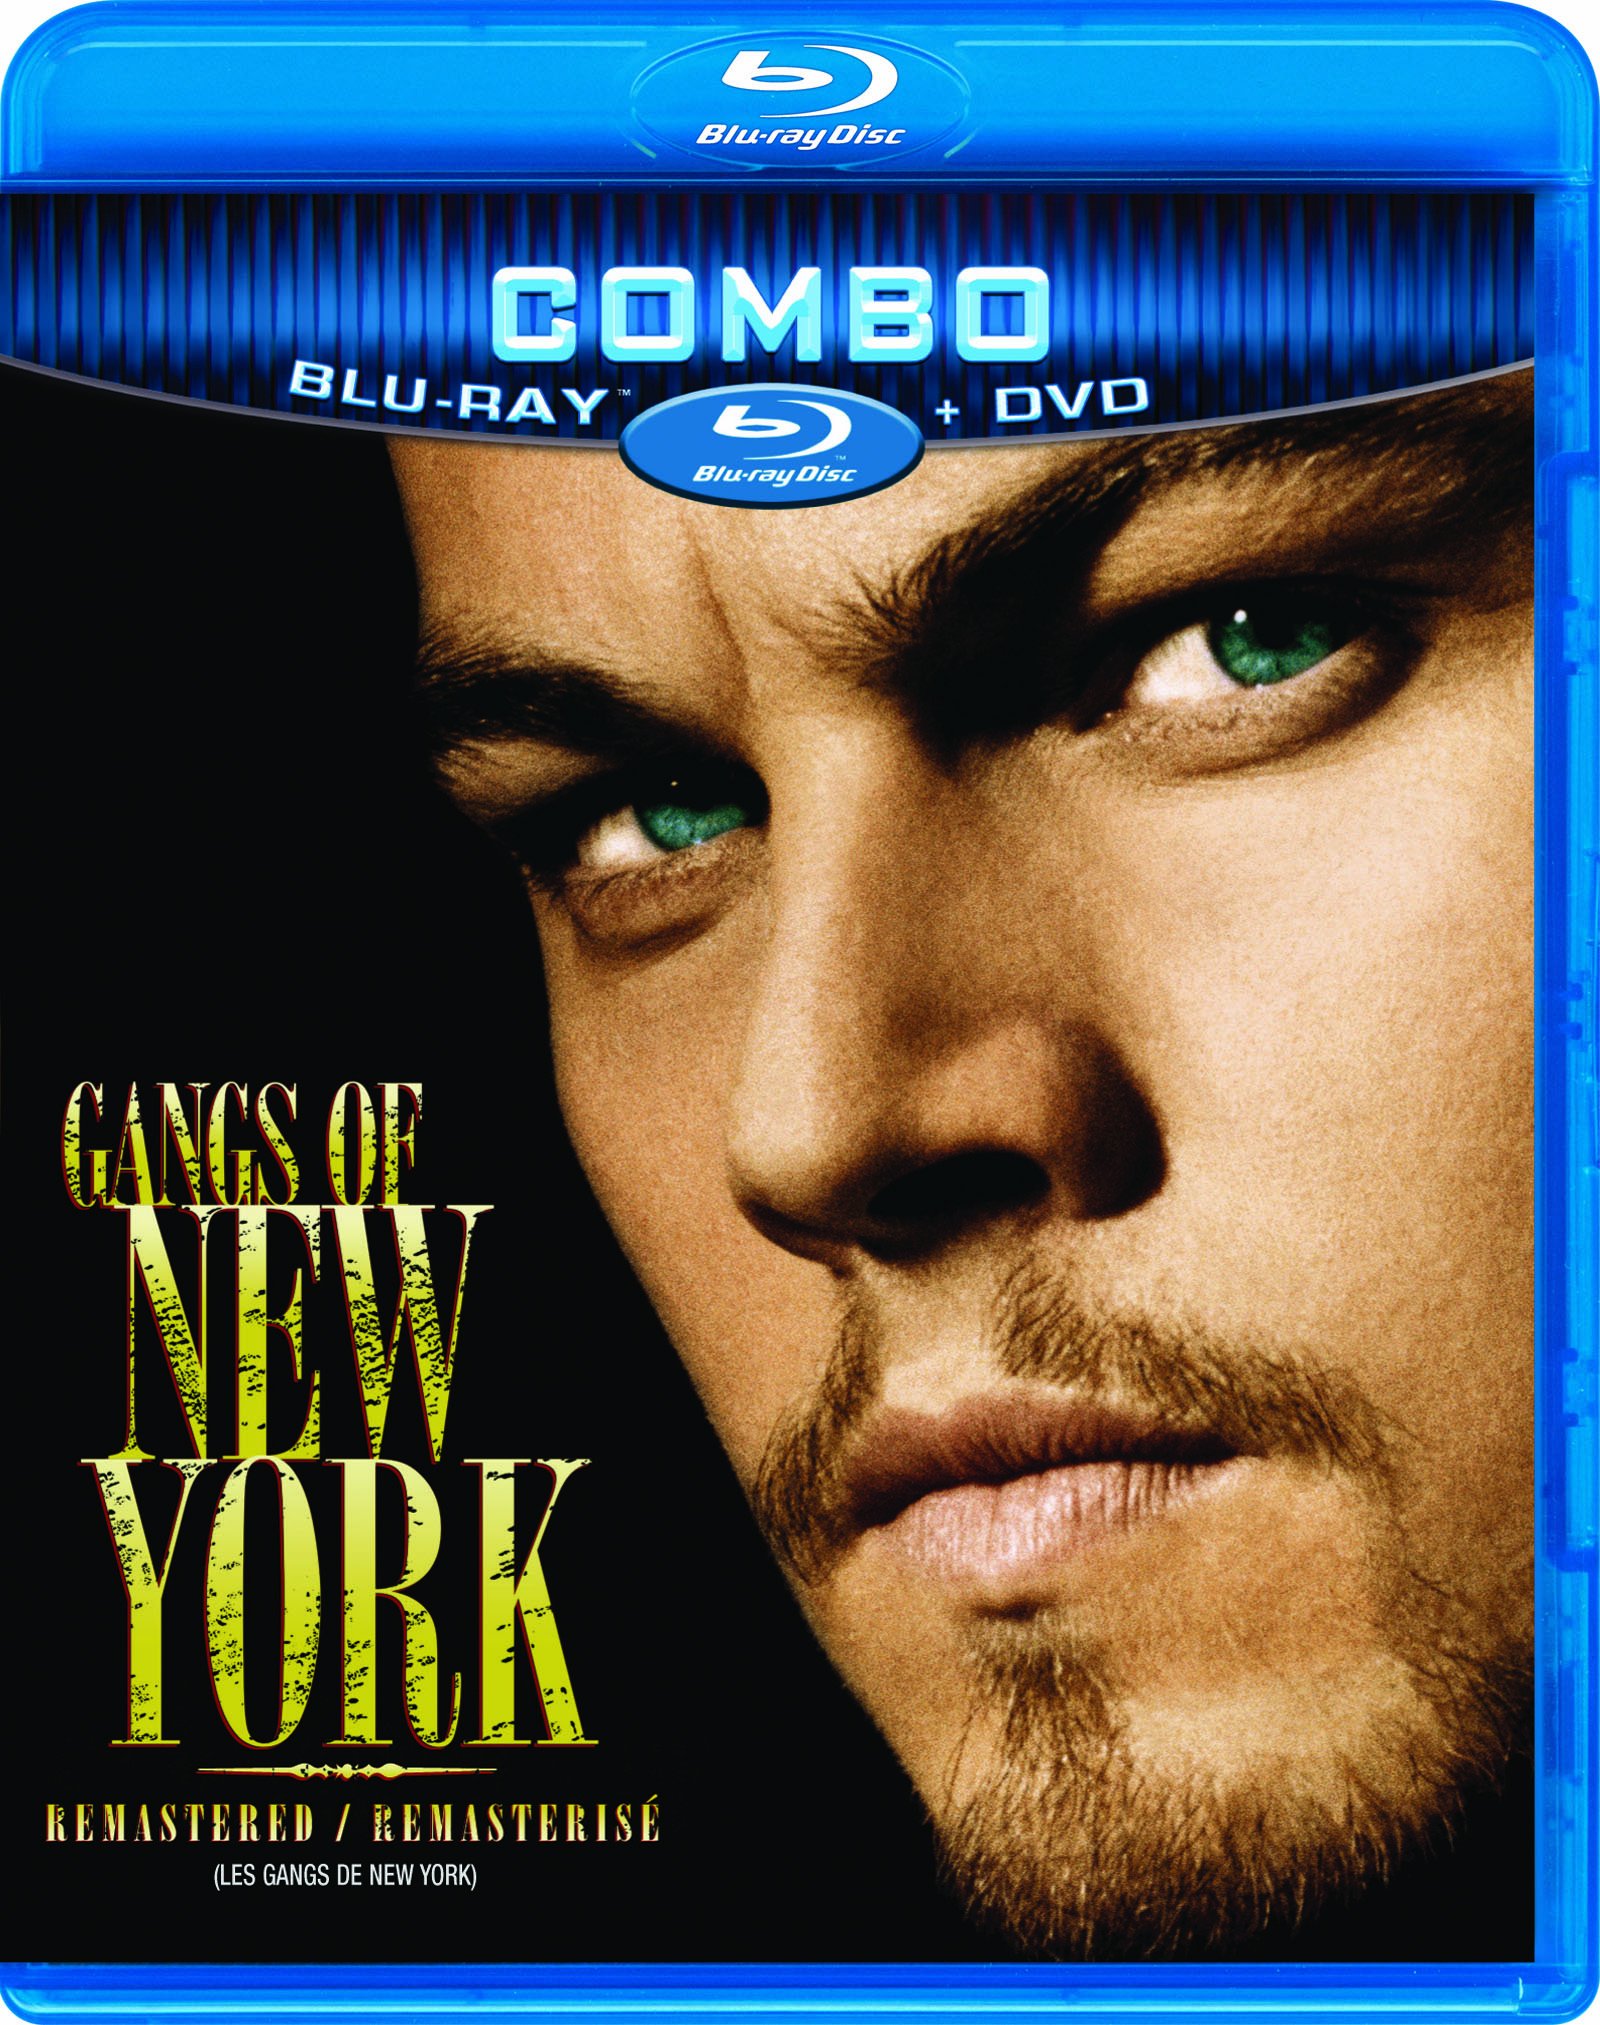 Gangs of New York (Blu-ray + DVD) on MovieShack